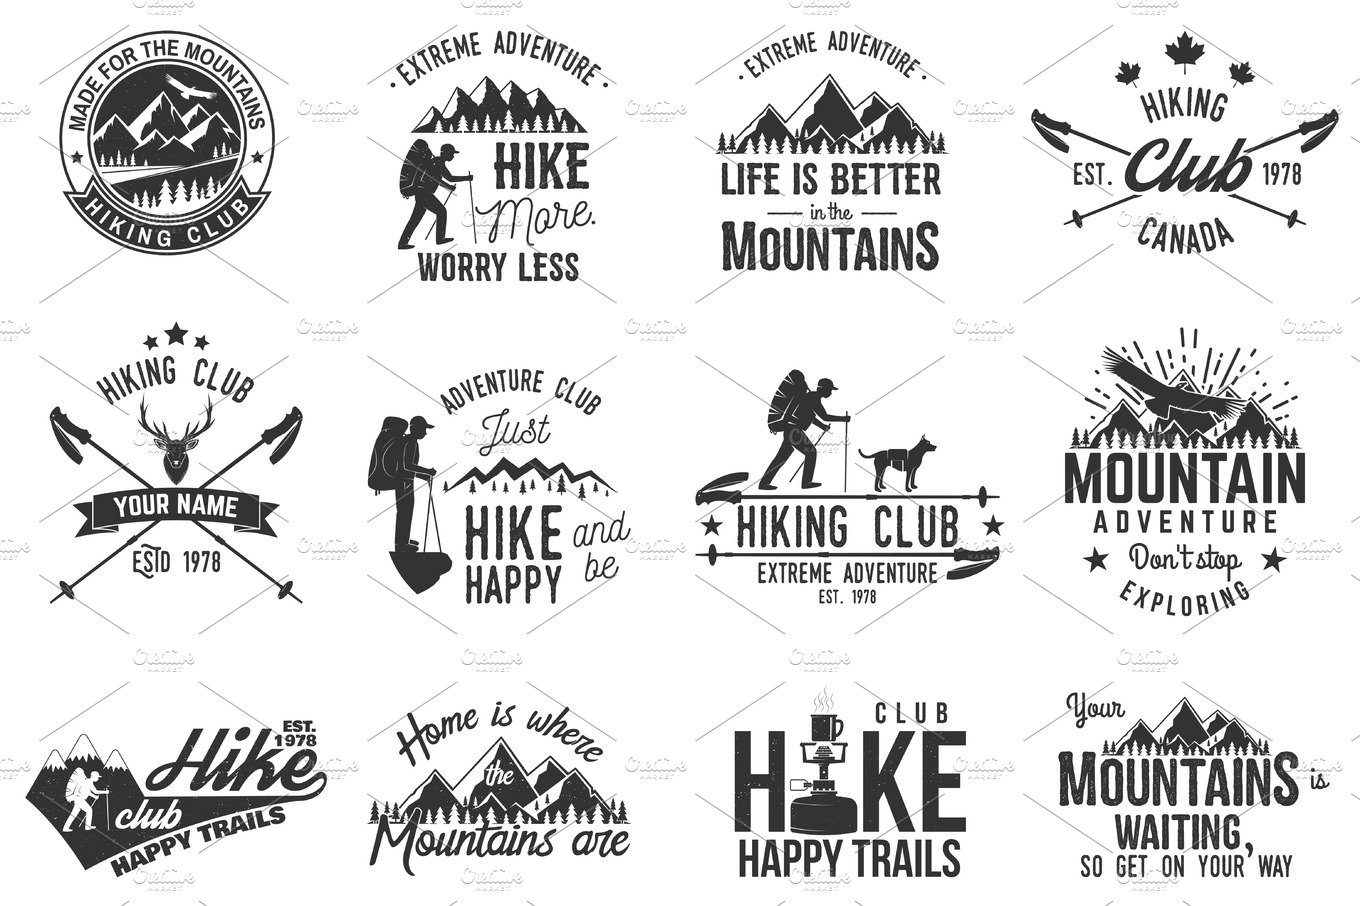 Hiking club badge. cover image.